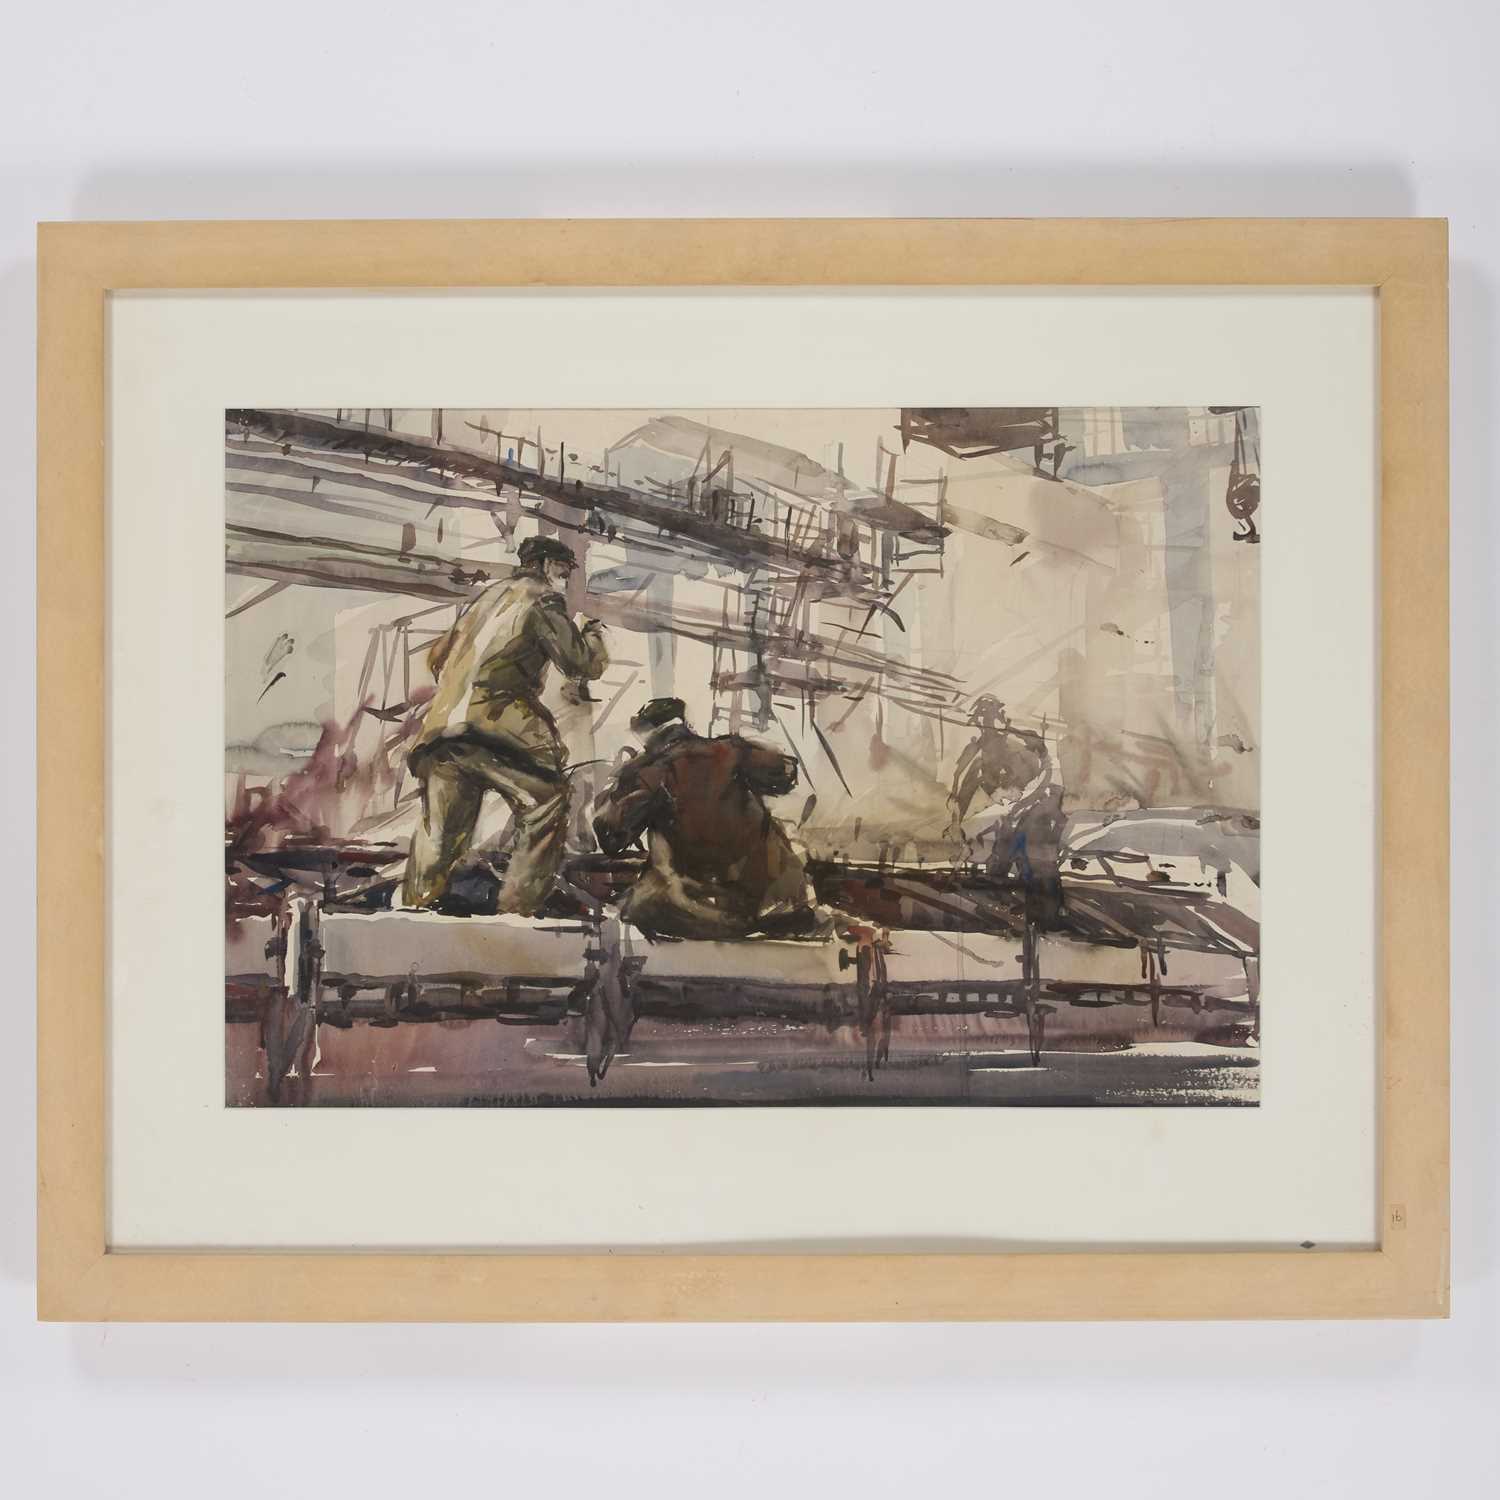 VALENTIN G. TARANENKO (BORN 1933) FIGURES WORKING ON A LOCOMOTIVE - Image 2 of 3